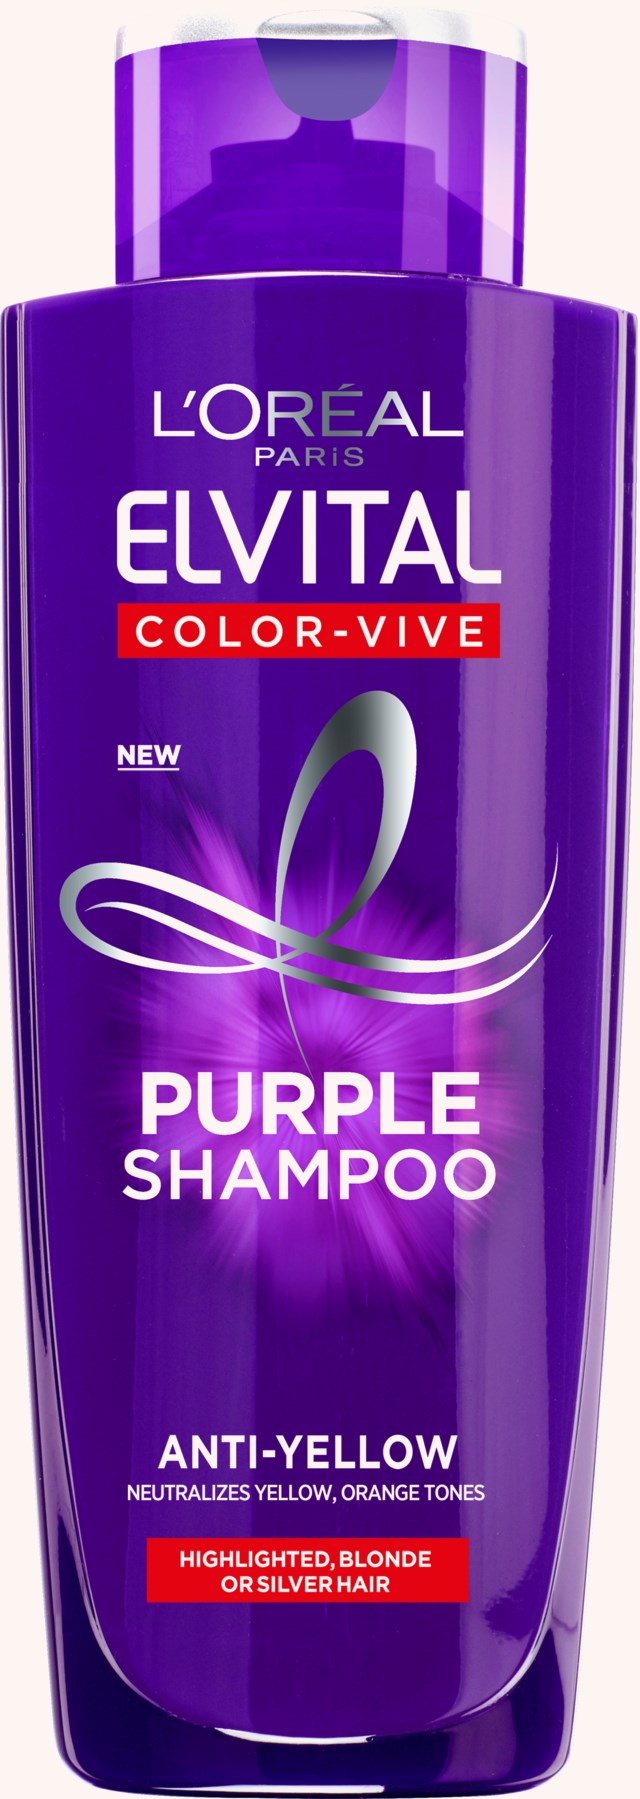 Elvital Color-Vive Silver Shampoo 200 ml